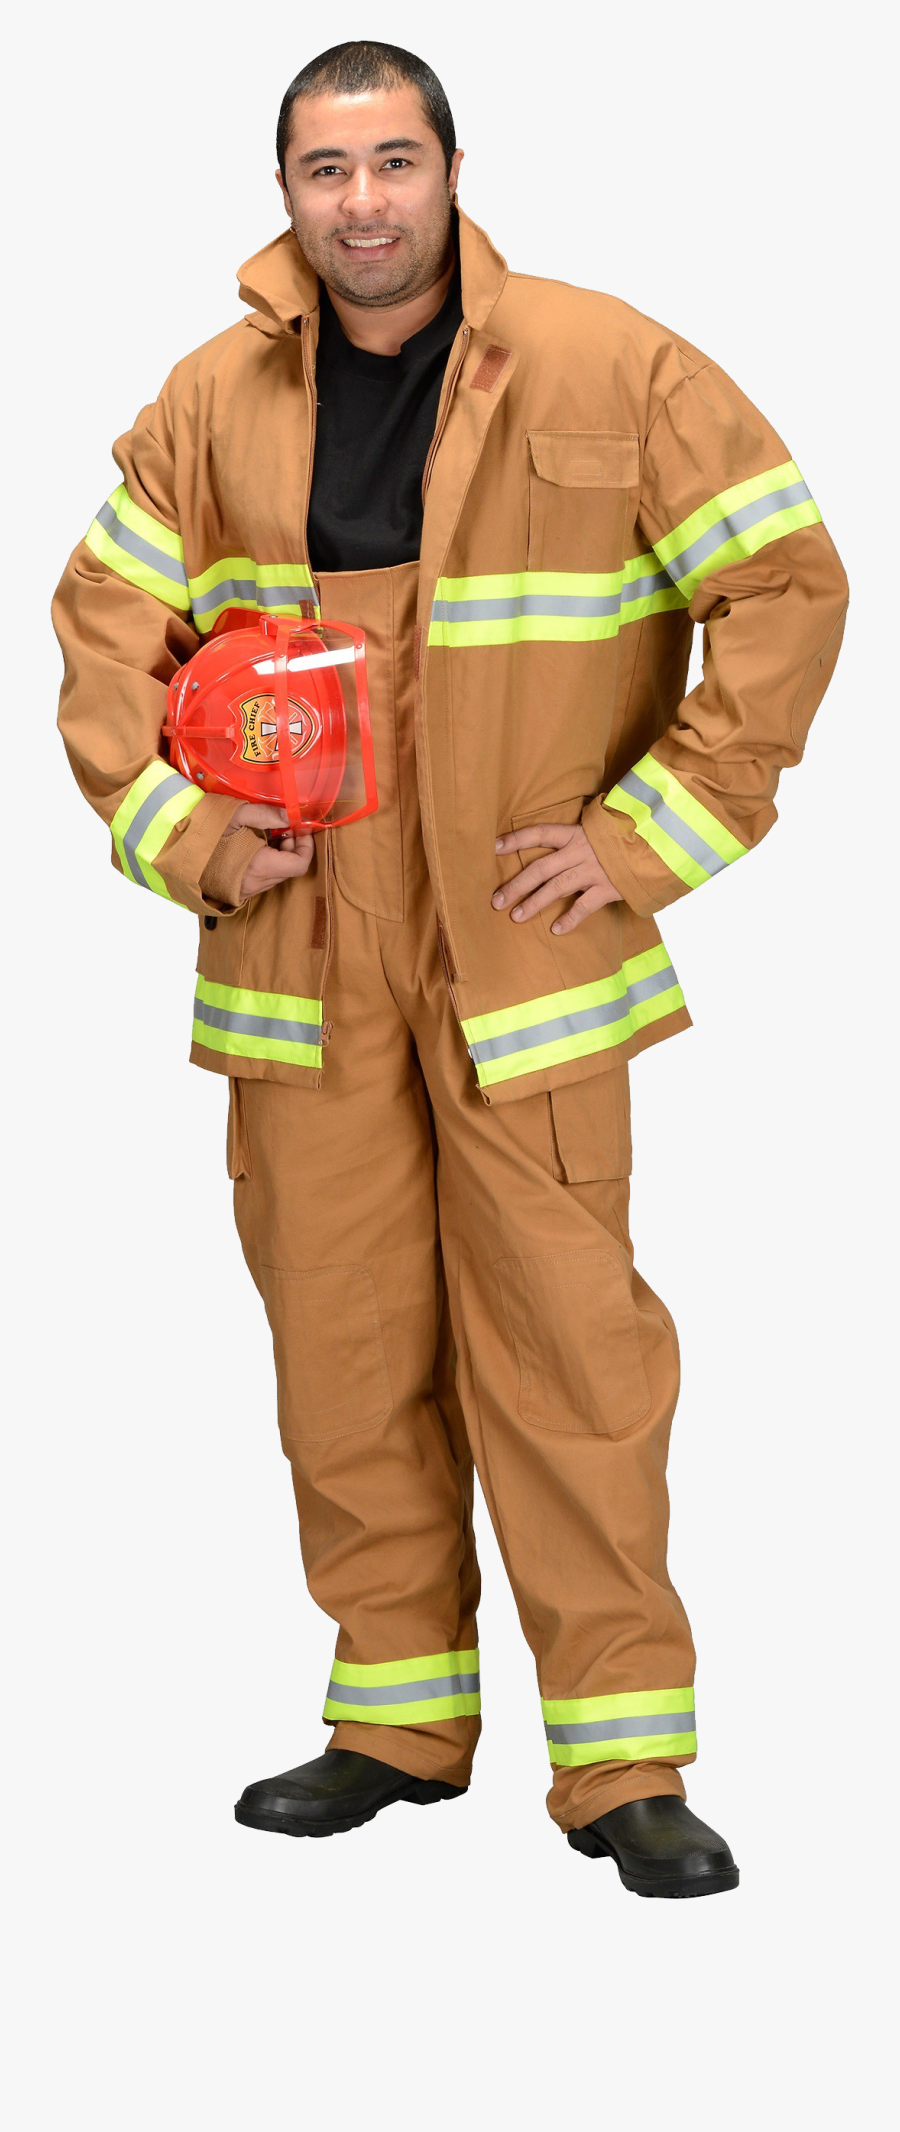 Fireman Png Clipart Background - Firefighter Suit, Transparent Clipart